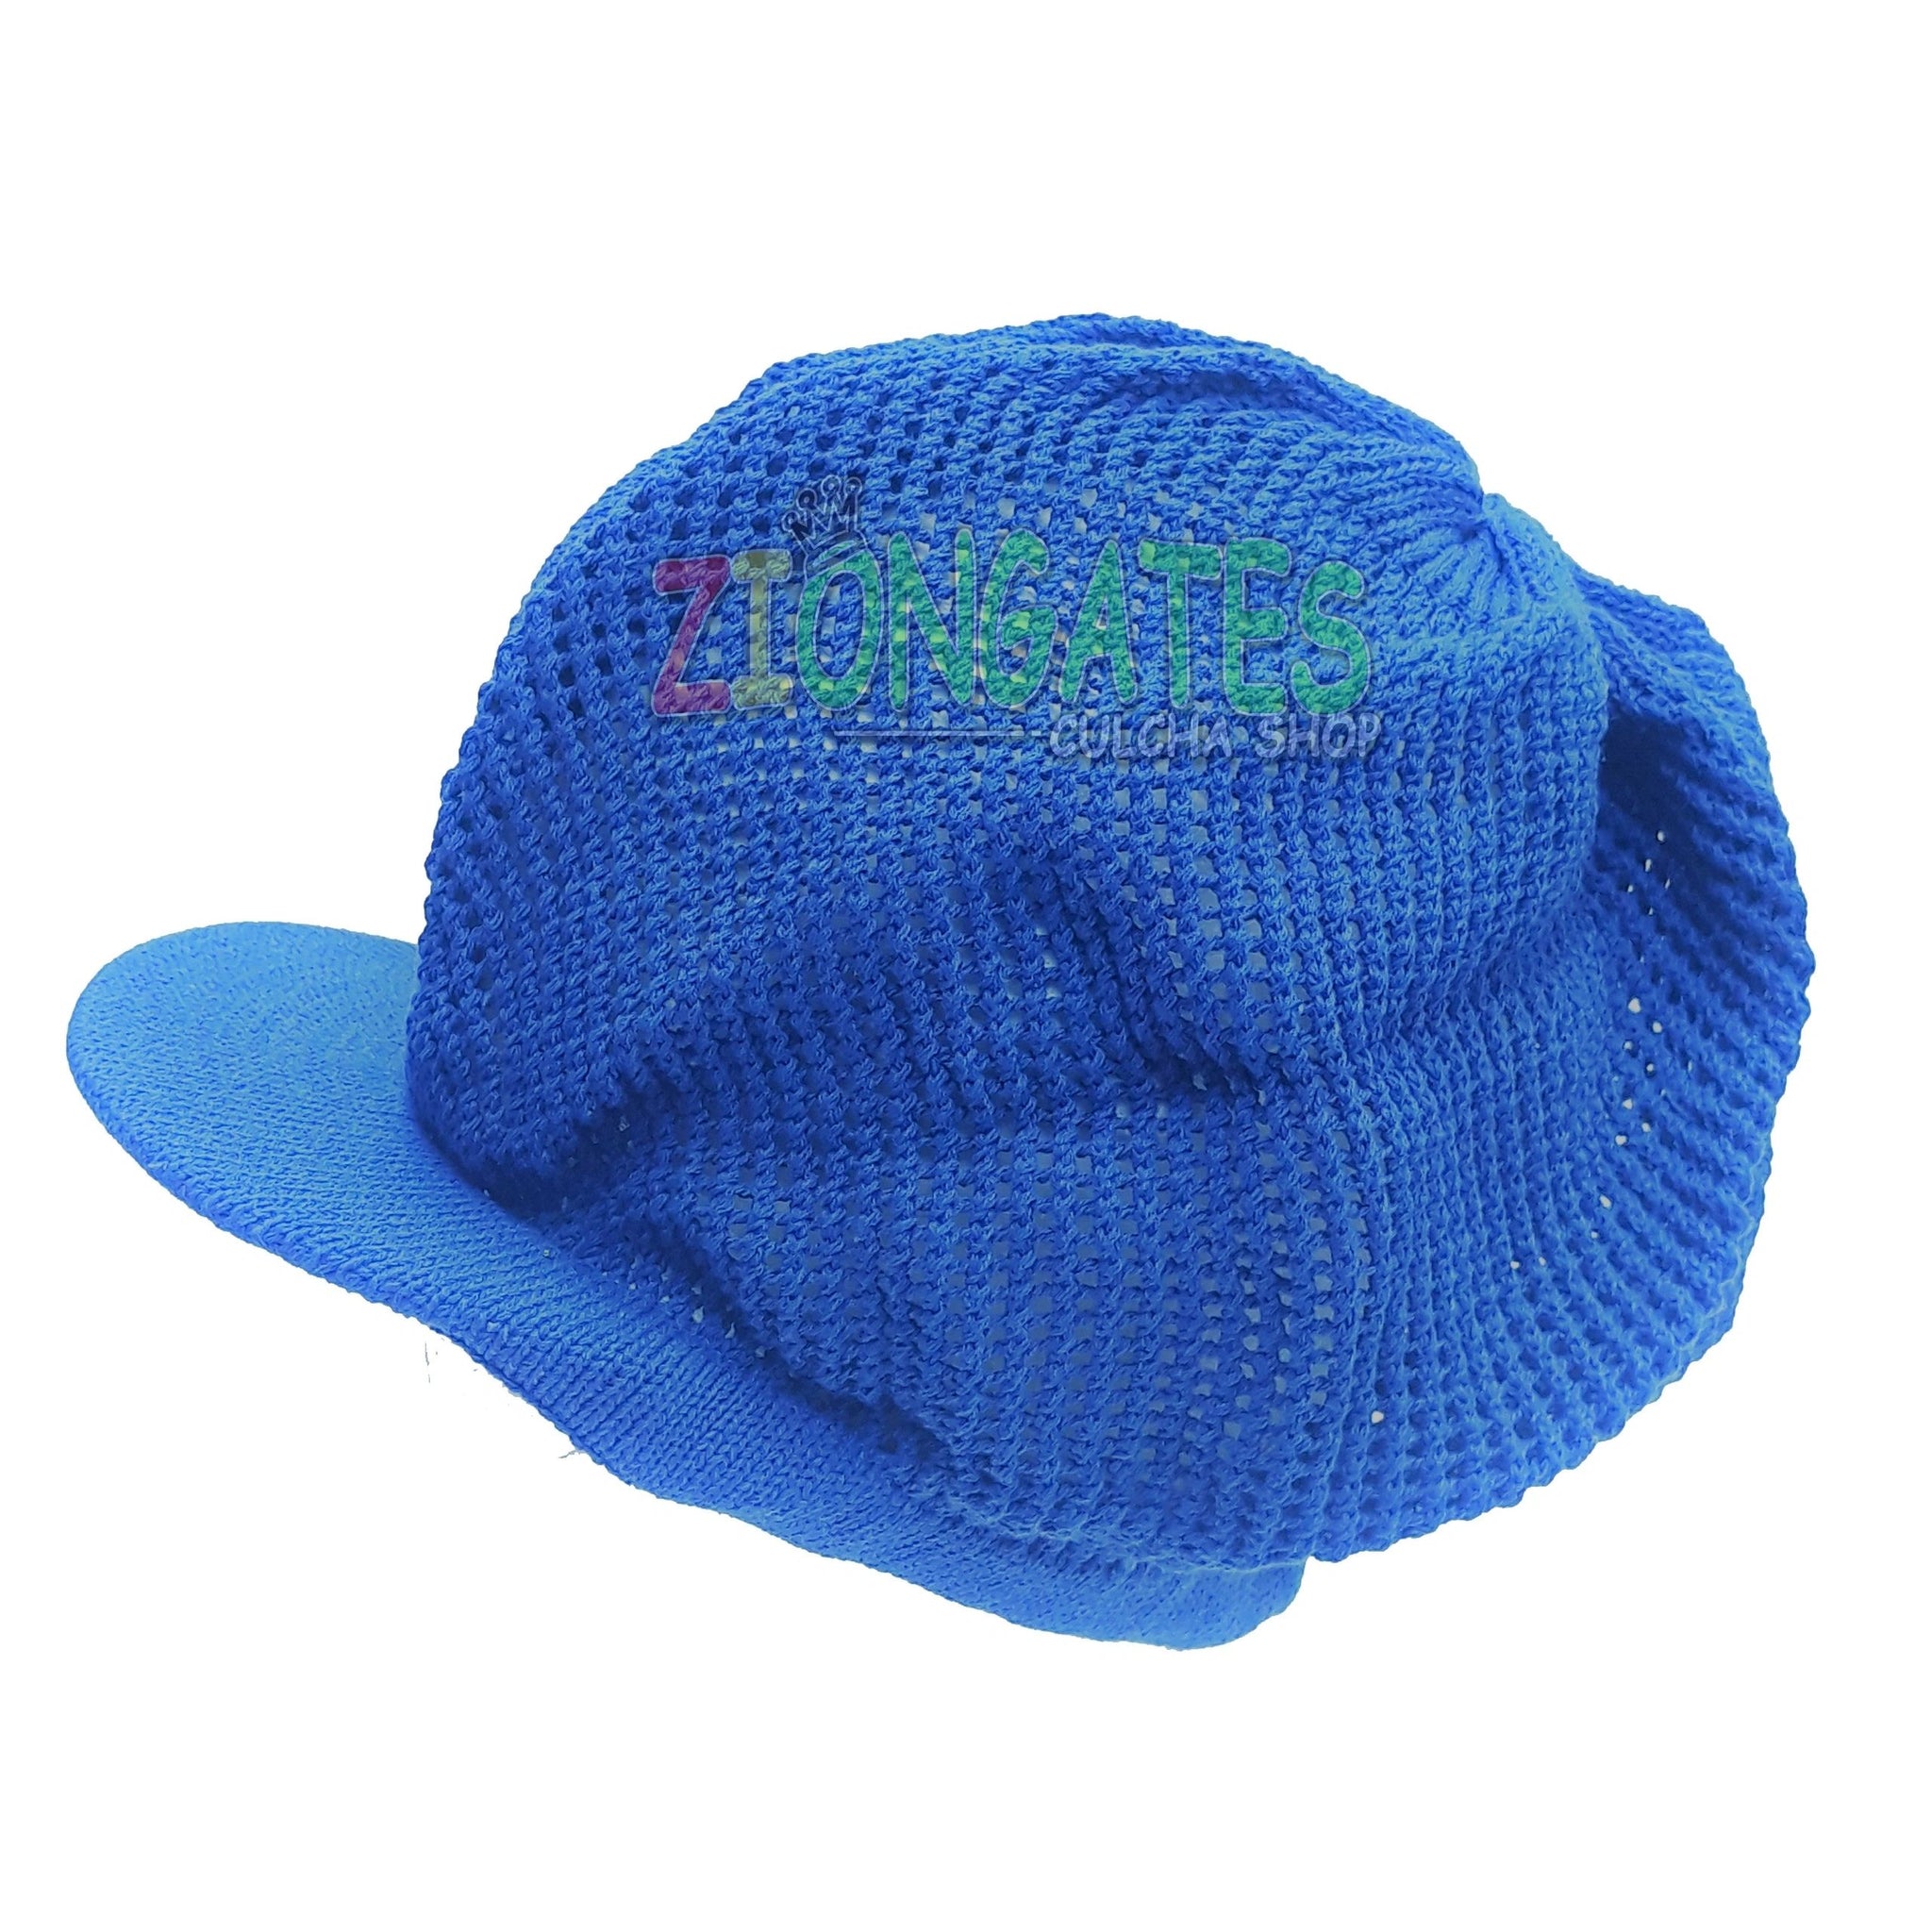 rh035-10 Medium ROYAL BLUE MESH rasta hats